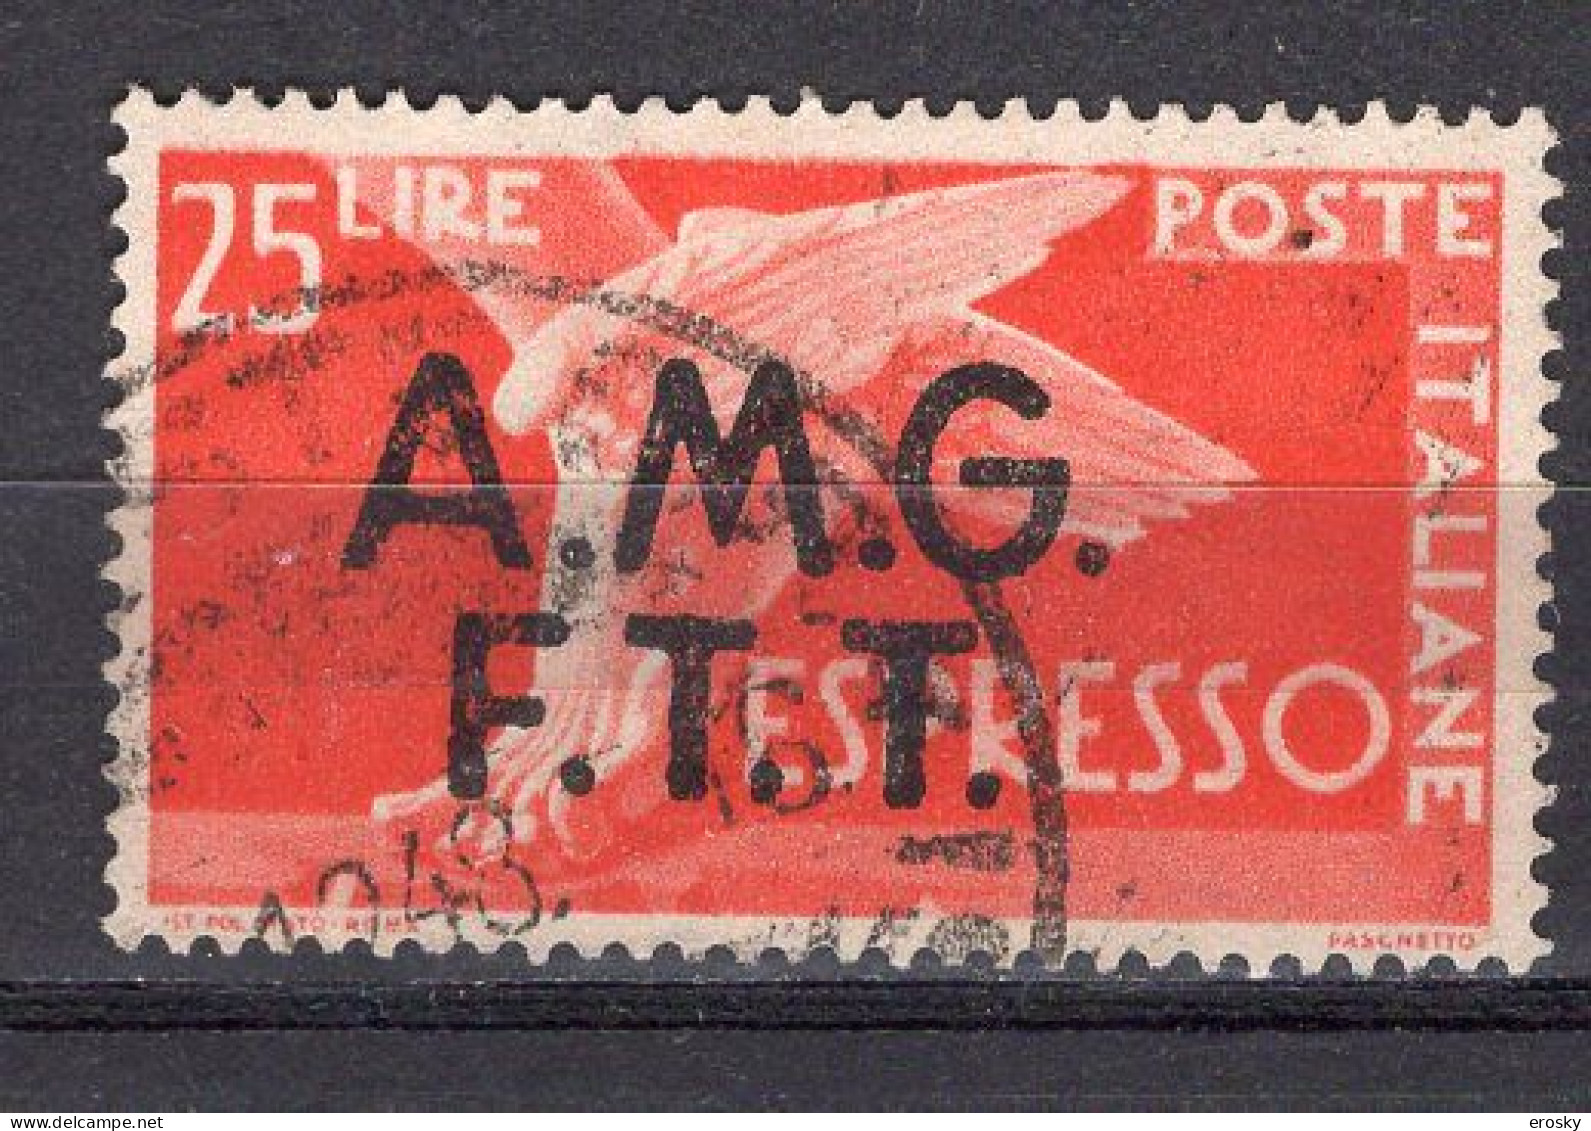 Z6883 - TRIESTE AMG-FTT ESPRESSO SASSONE N°2 - Express Mail